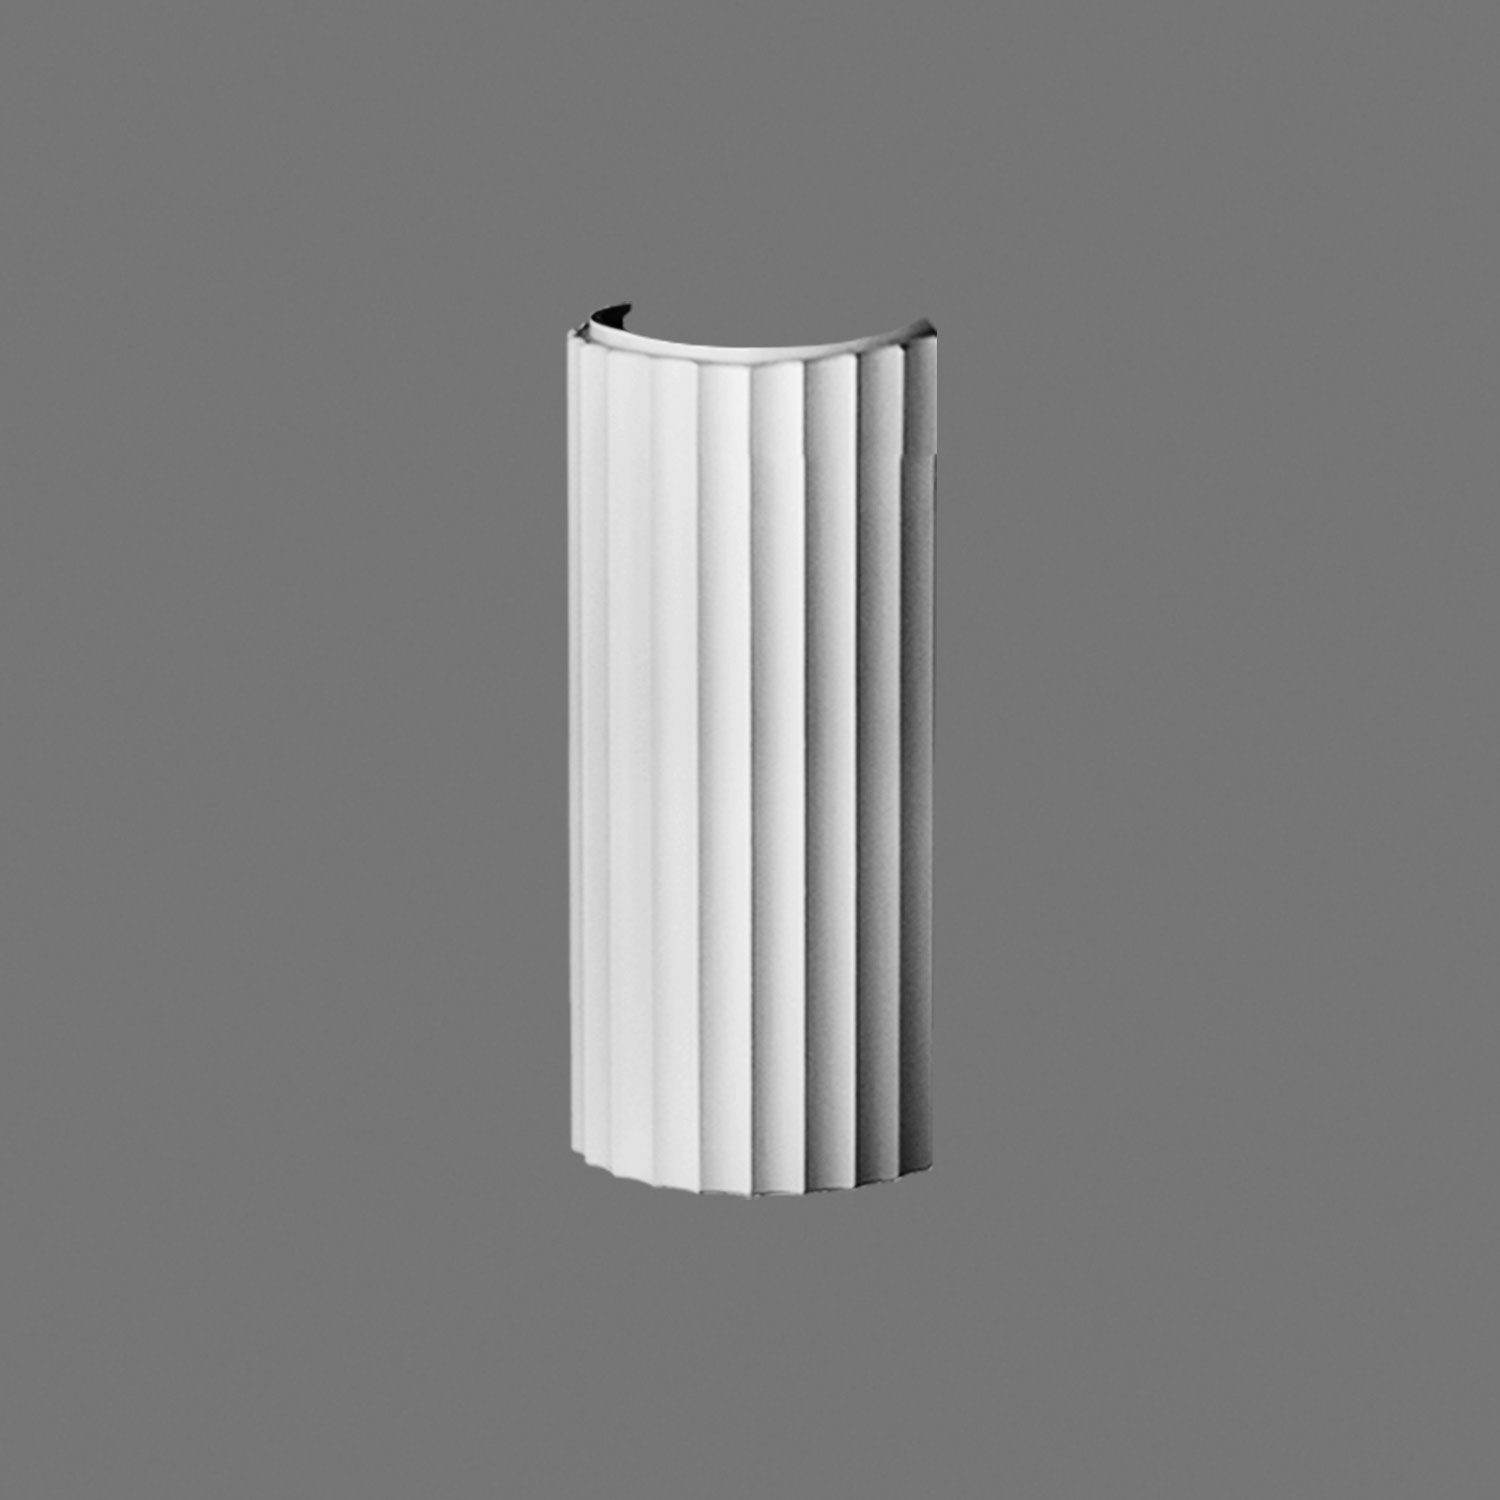 Segmented Half Column